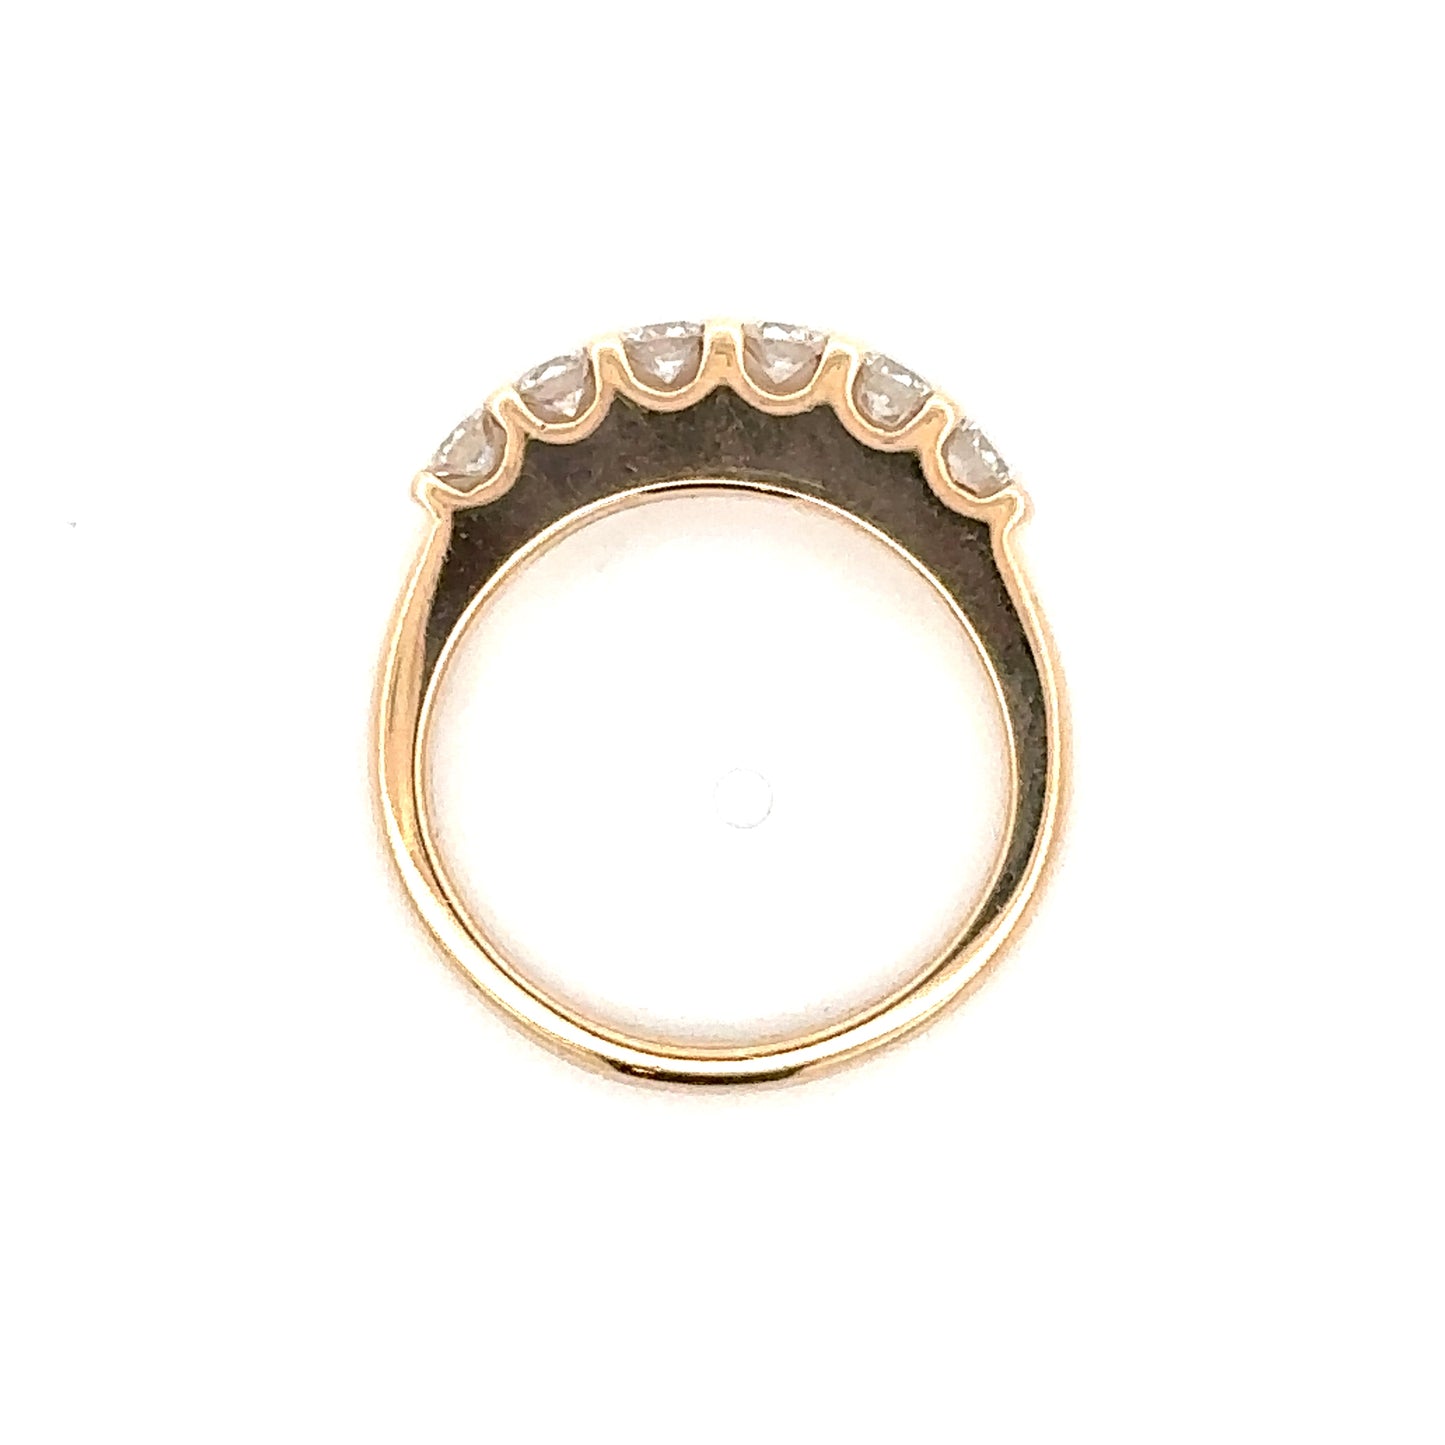 U-Shape Channel Set Wedding Ring in 14K Yellow Gold